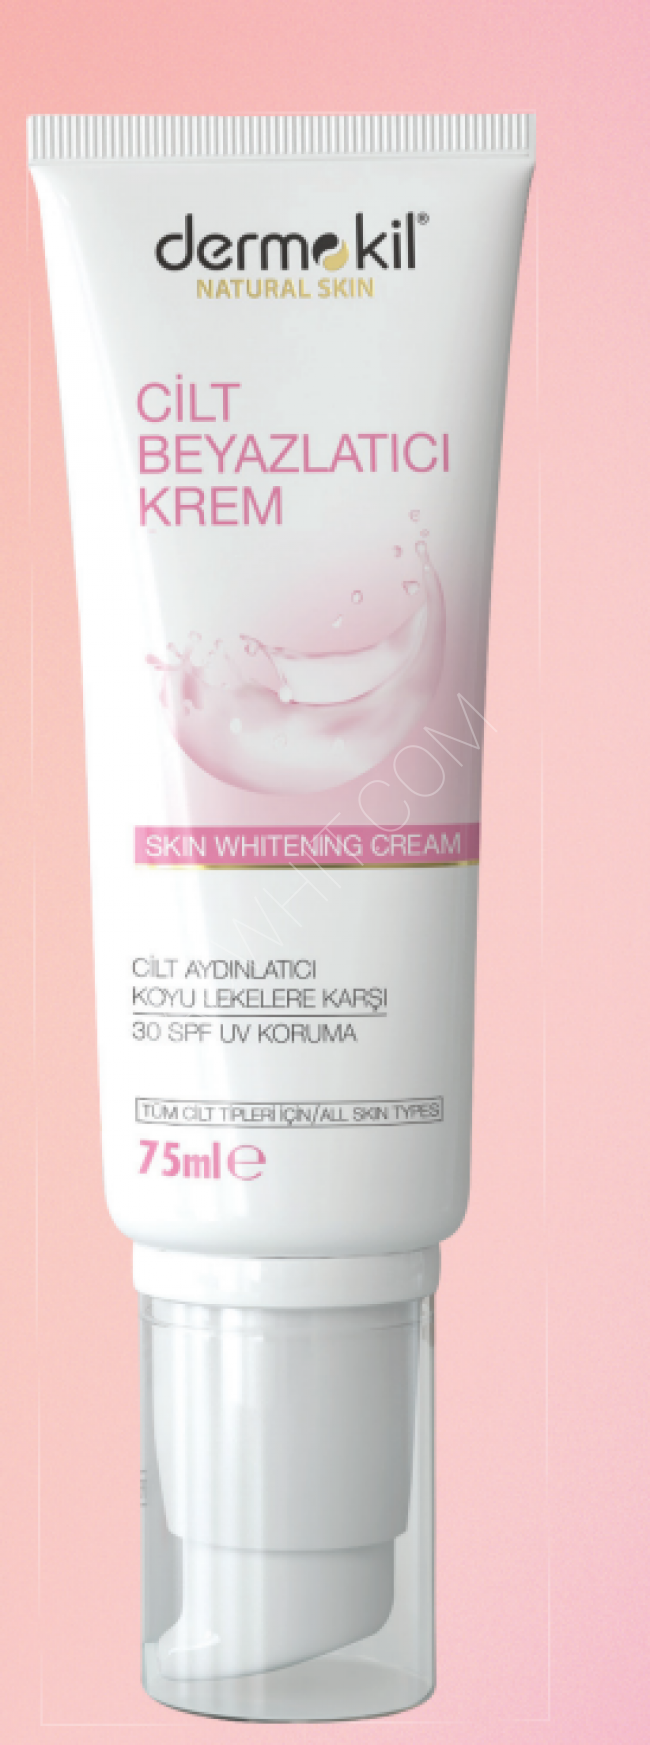 Skin lightening cream